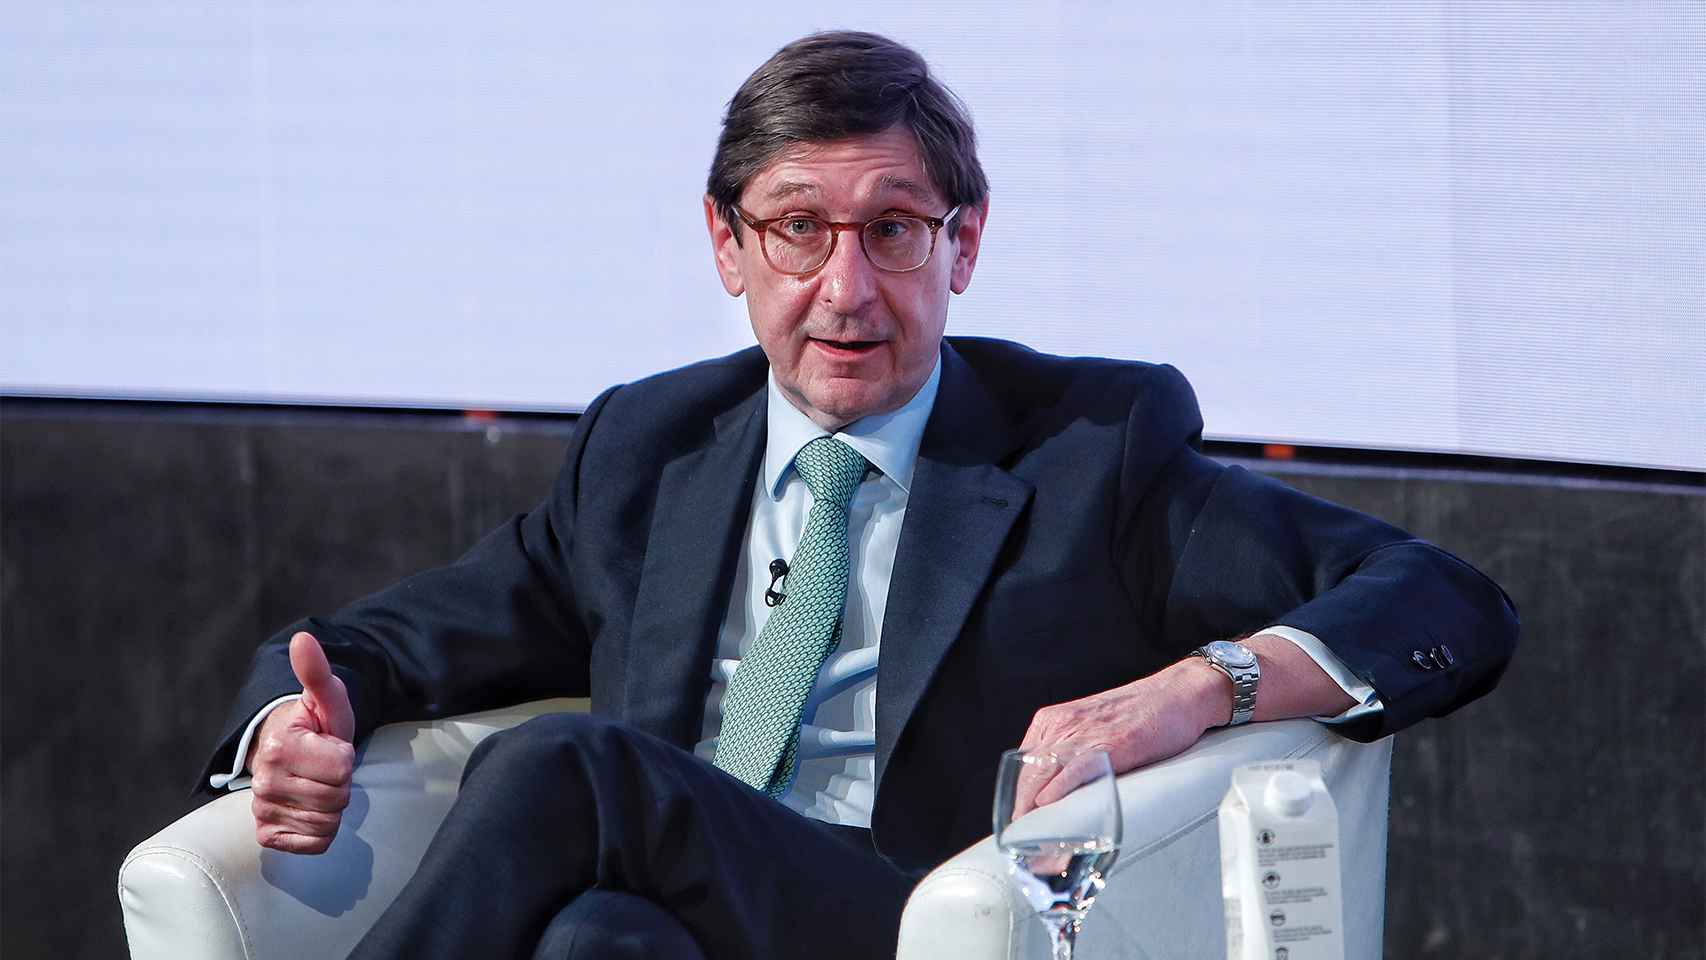 José Ignacio Goirigolzarri, presidente de CaixaBank.